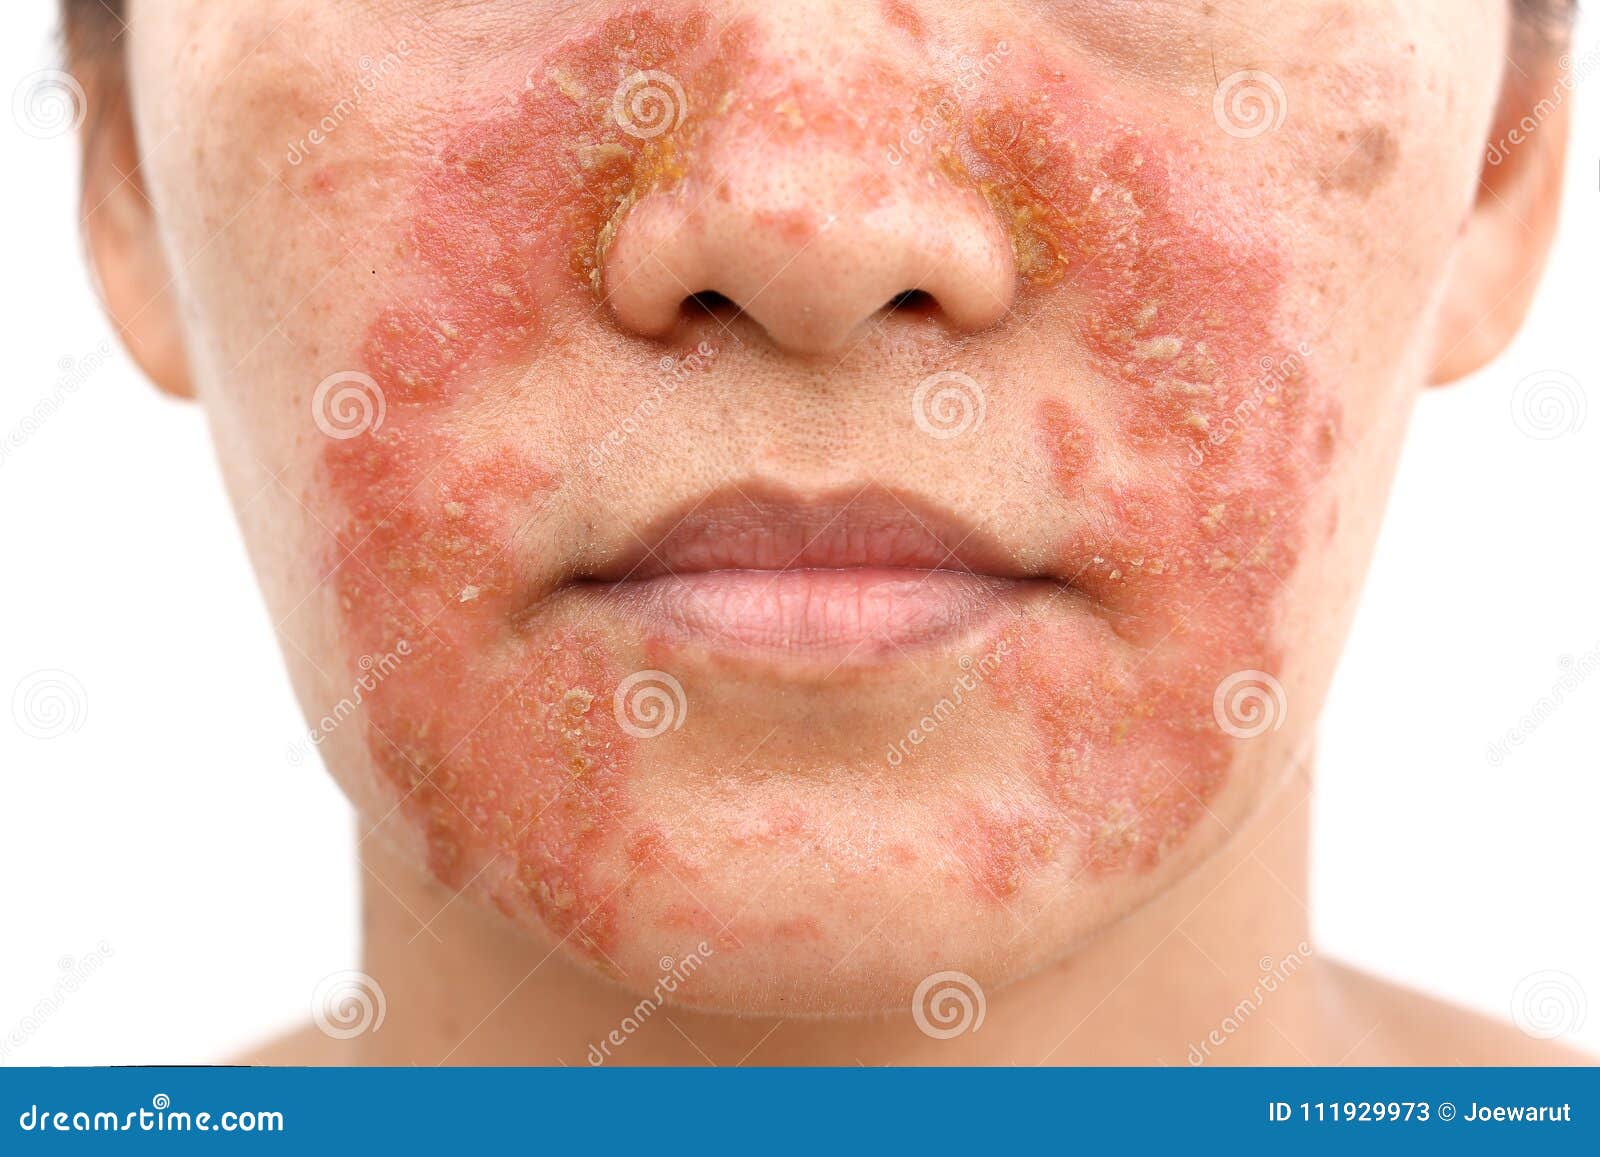 seborrheic dermatitis on face